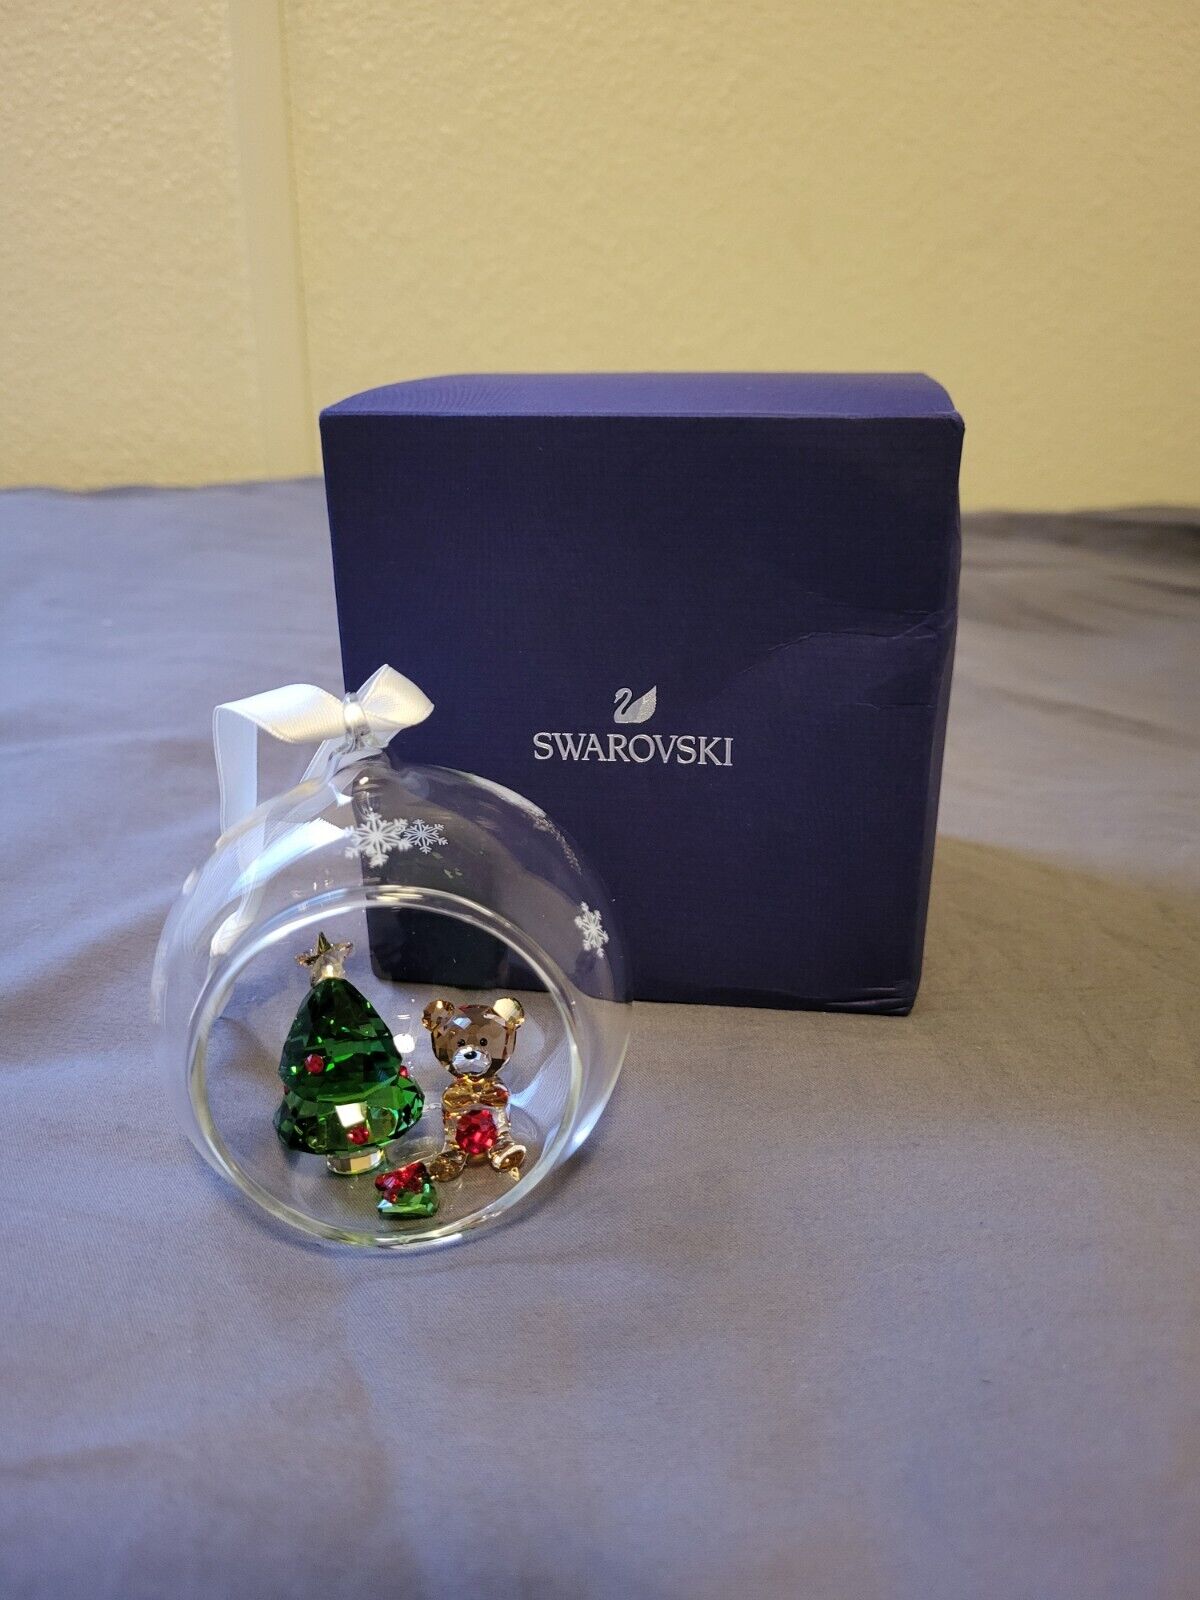 Swarovski Ball Ornament Christmas Teddy Bear And Tree Scene #5533942 NIB